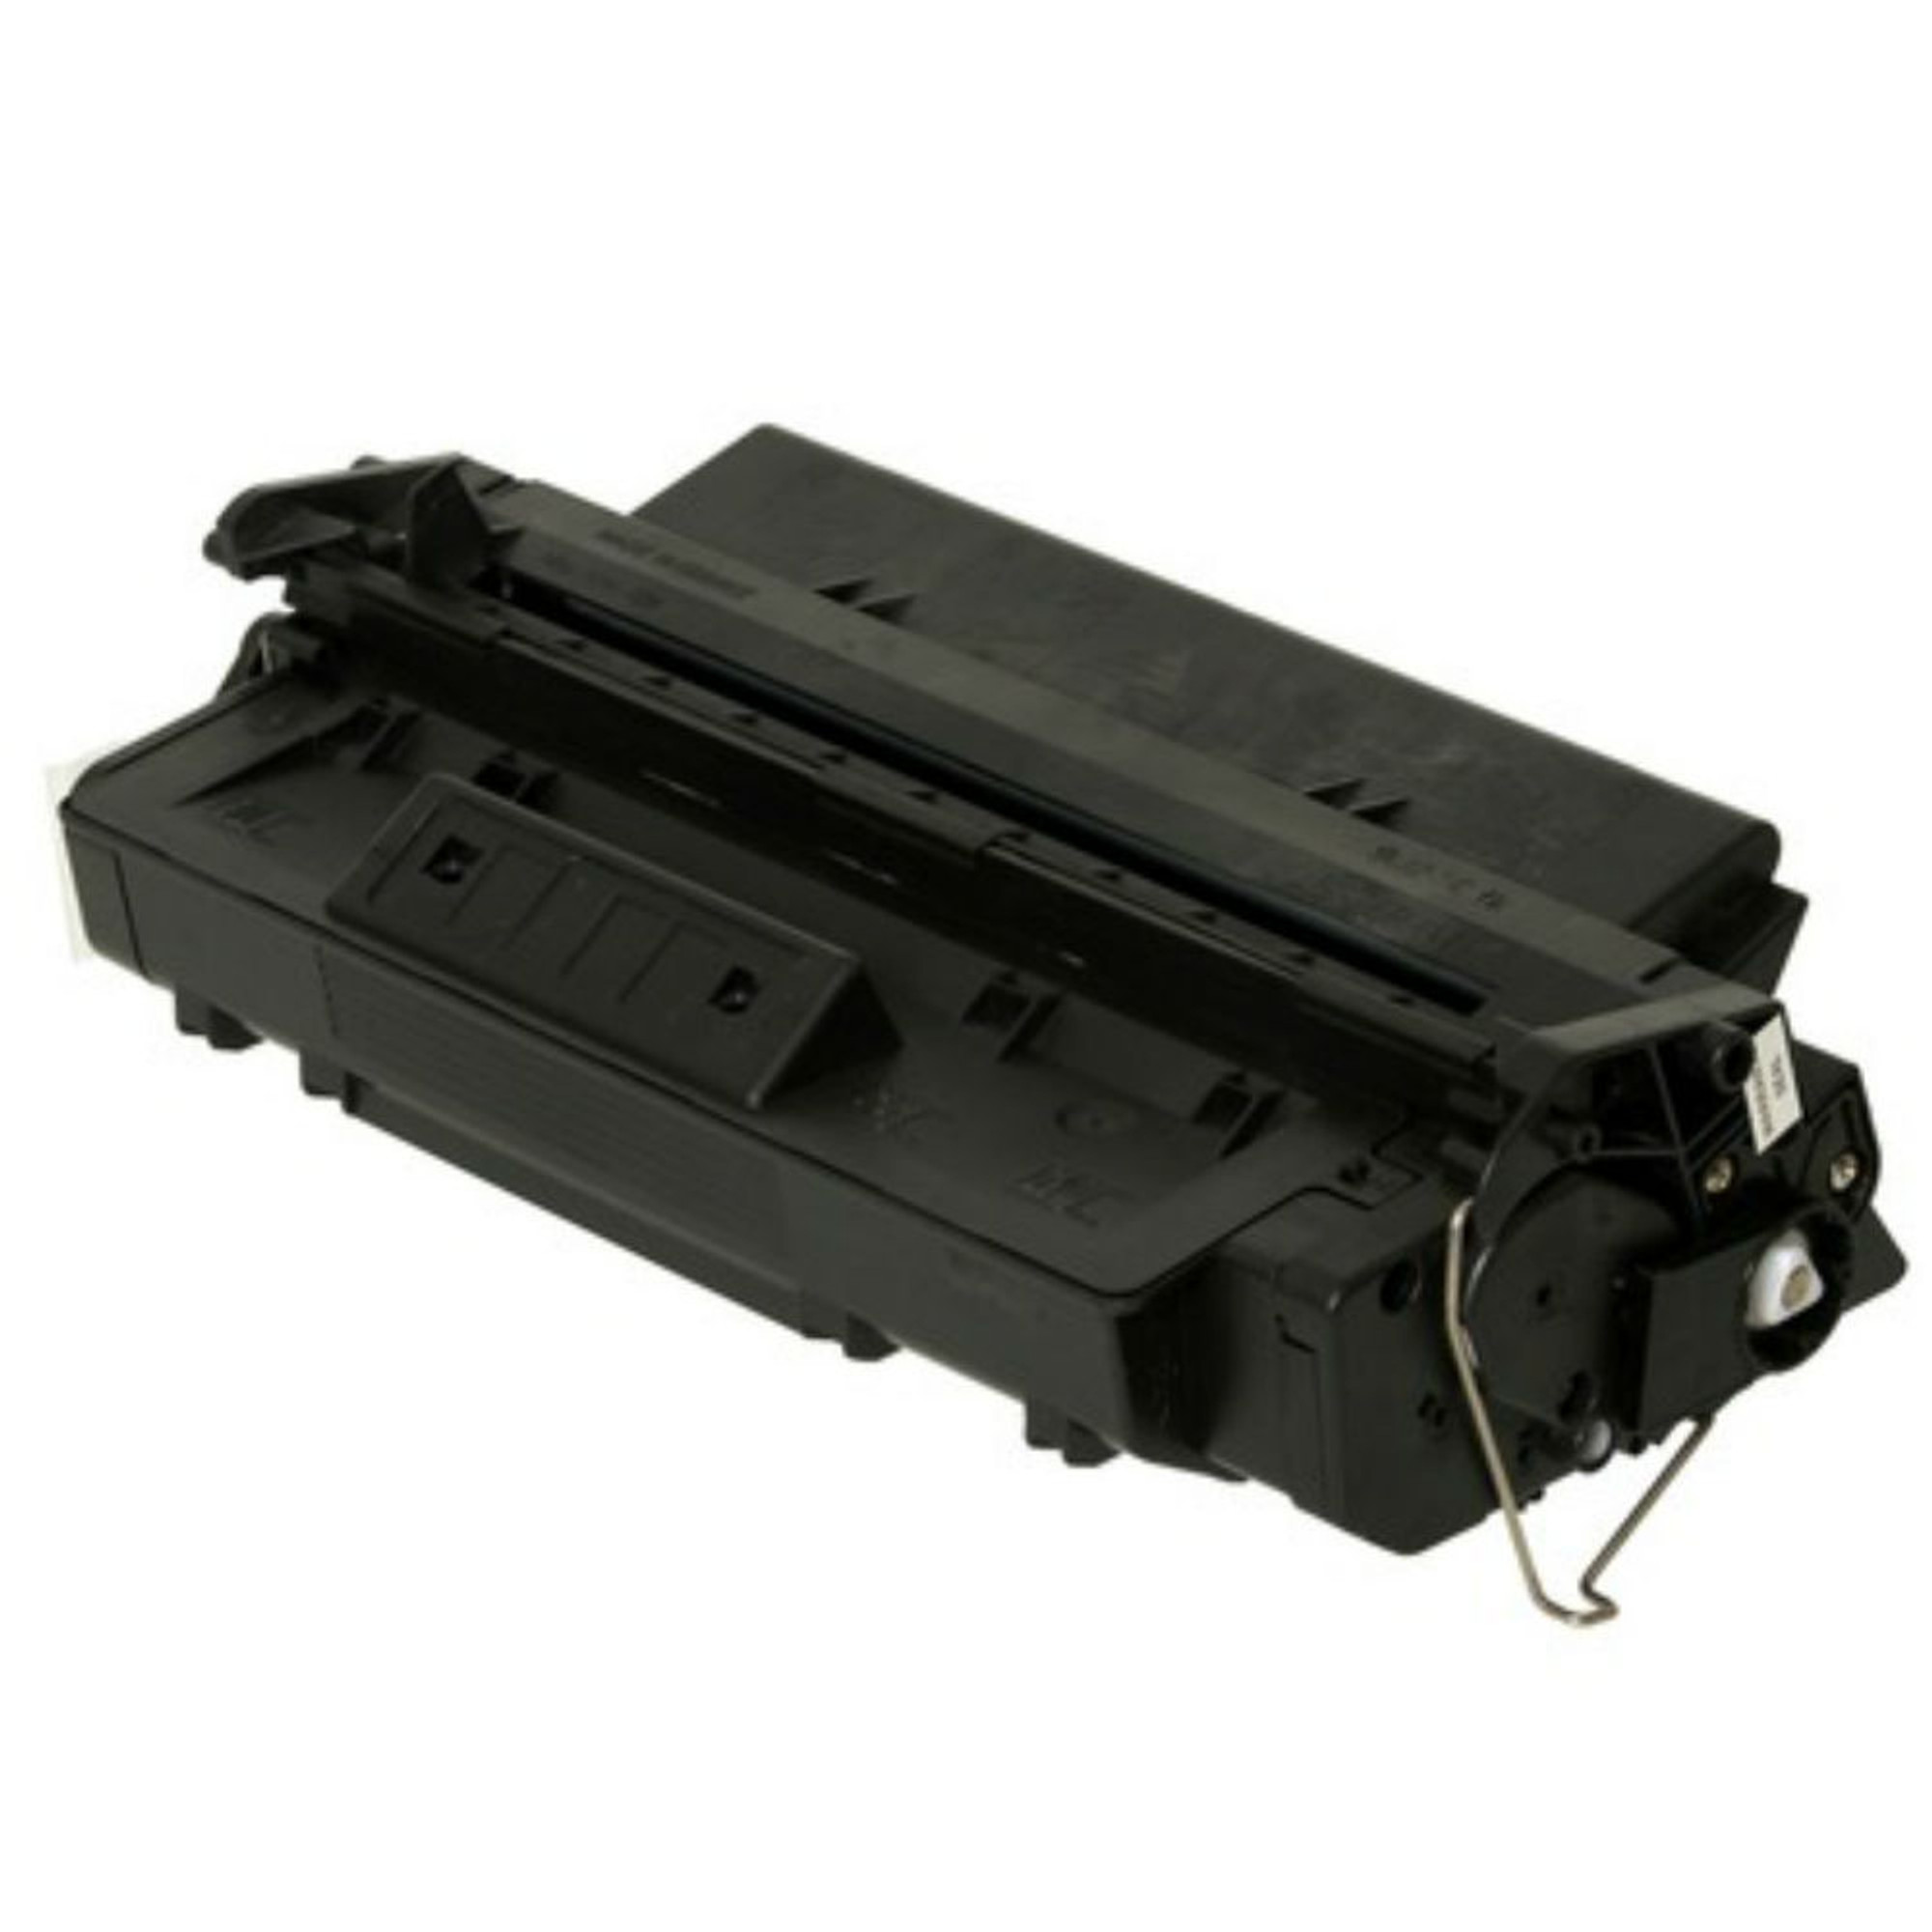 Modsige Cyclops Held og lykke MICR Toner Cartridges for HP Laserjet 2100 & 2200 Series of Laser Printers,  HP 96a